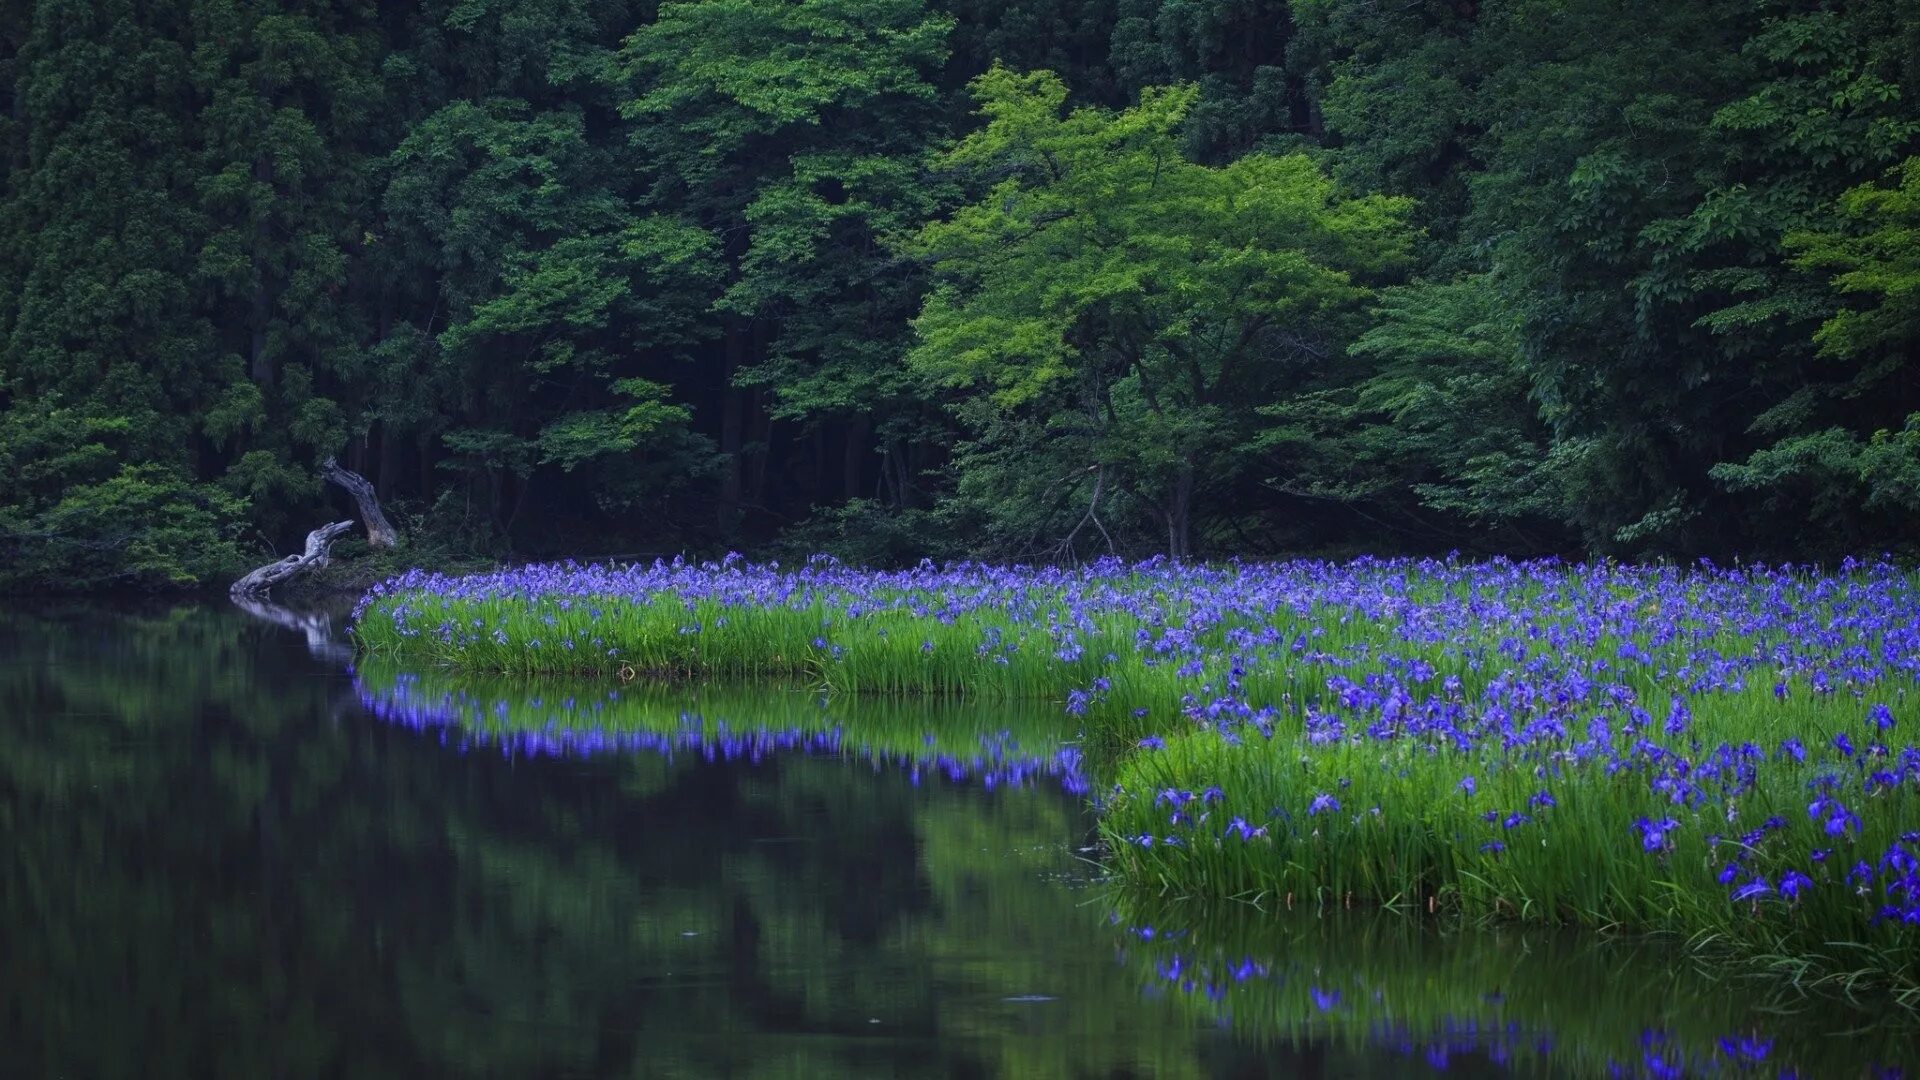 Реки сини. Река Вьюнок. Синяя природа. Озеро в лесу. Синий цвет в природе.